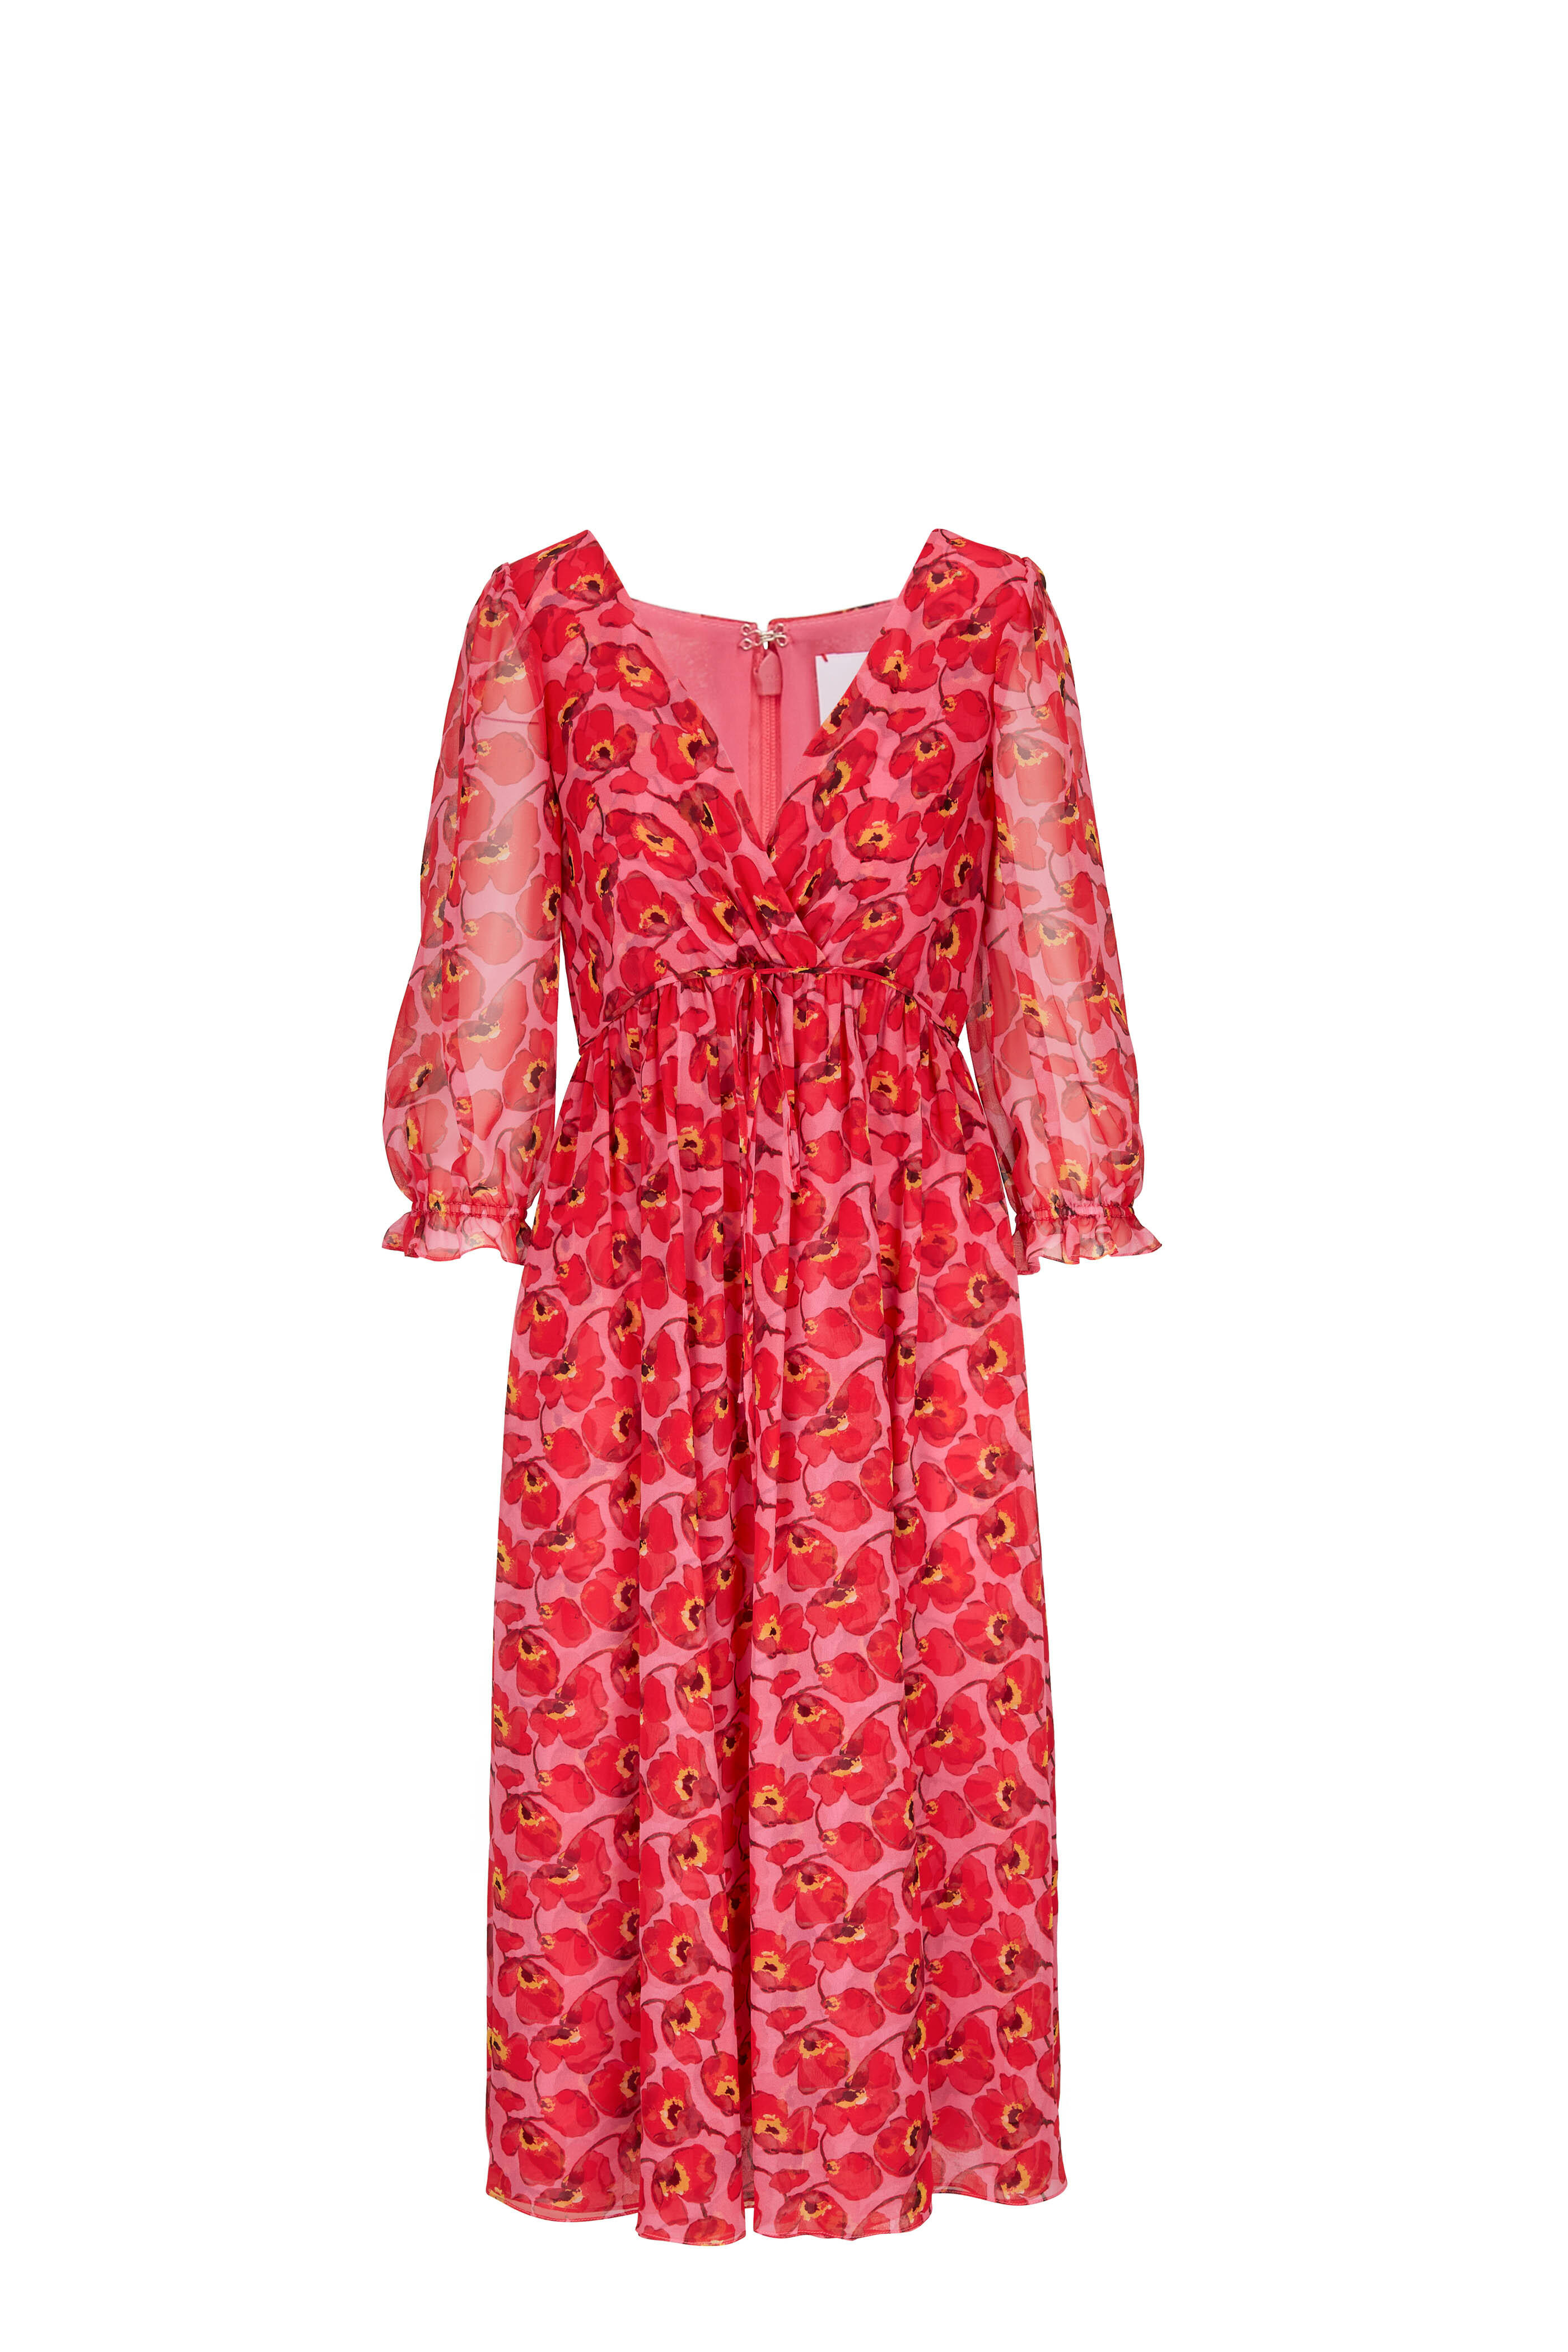 Carolina Herrera - Poppy Floral Silk Dress | Mitchell Stores